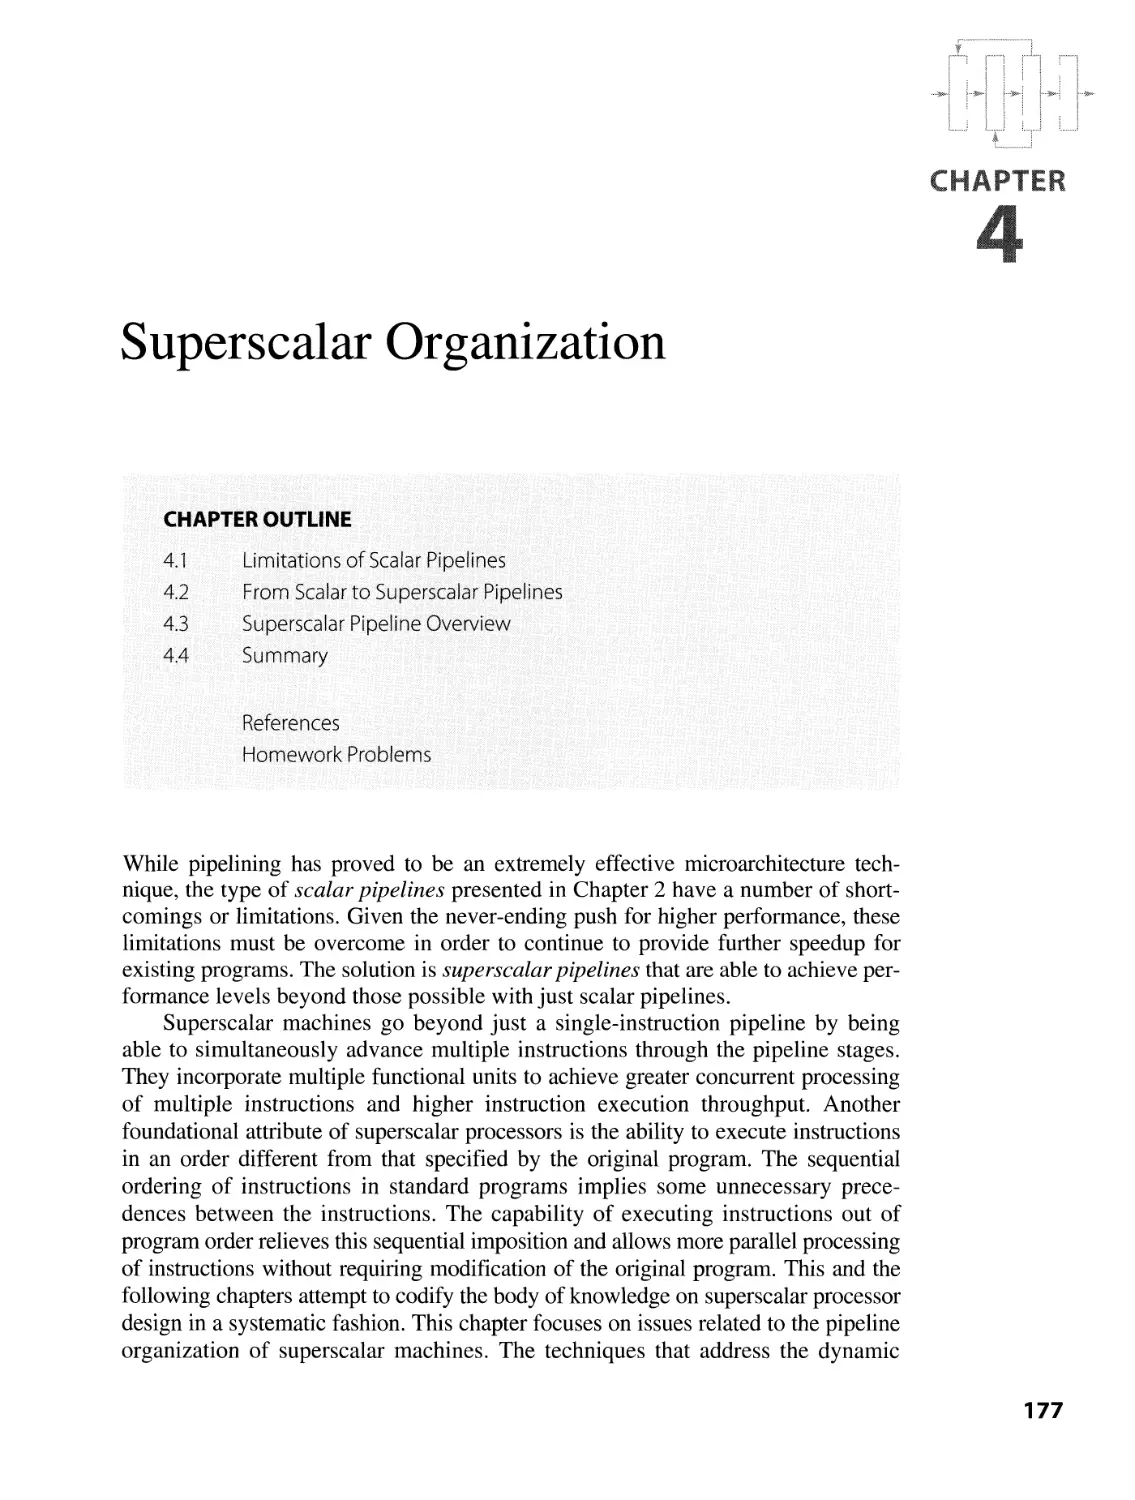 4. Superscalar Organization